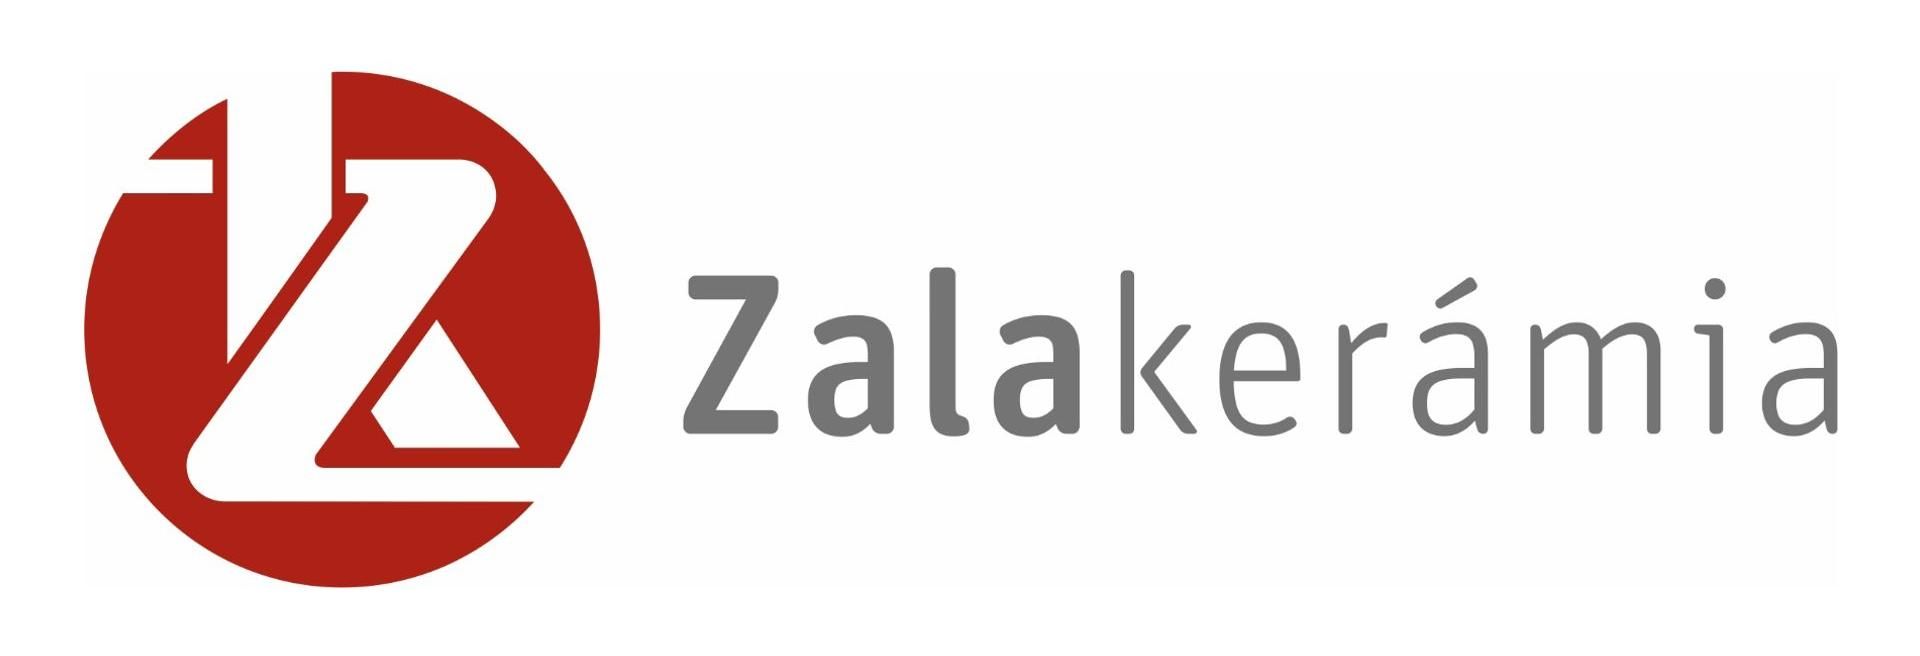 Tile maker Zalakerámia is expanding in Romhány - VIDEO REPORT